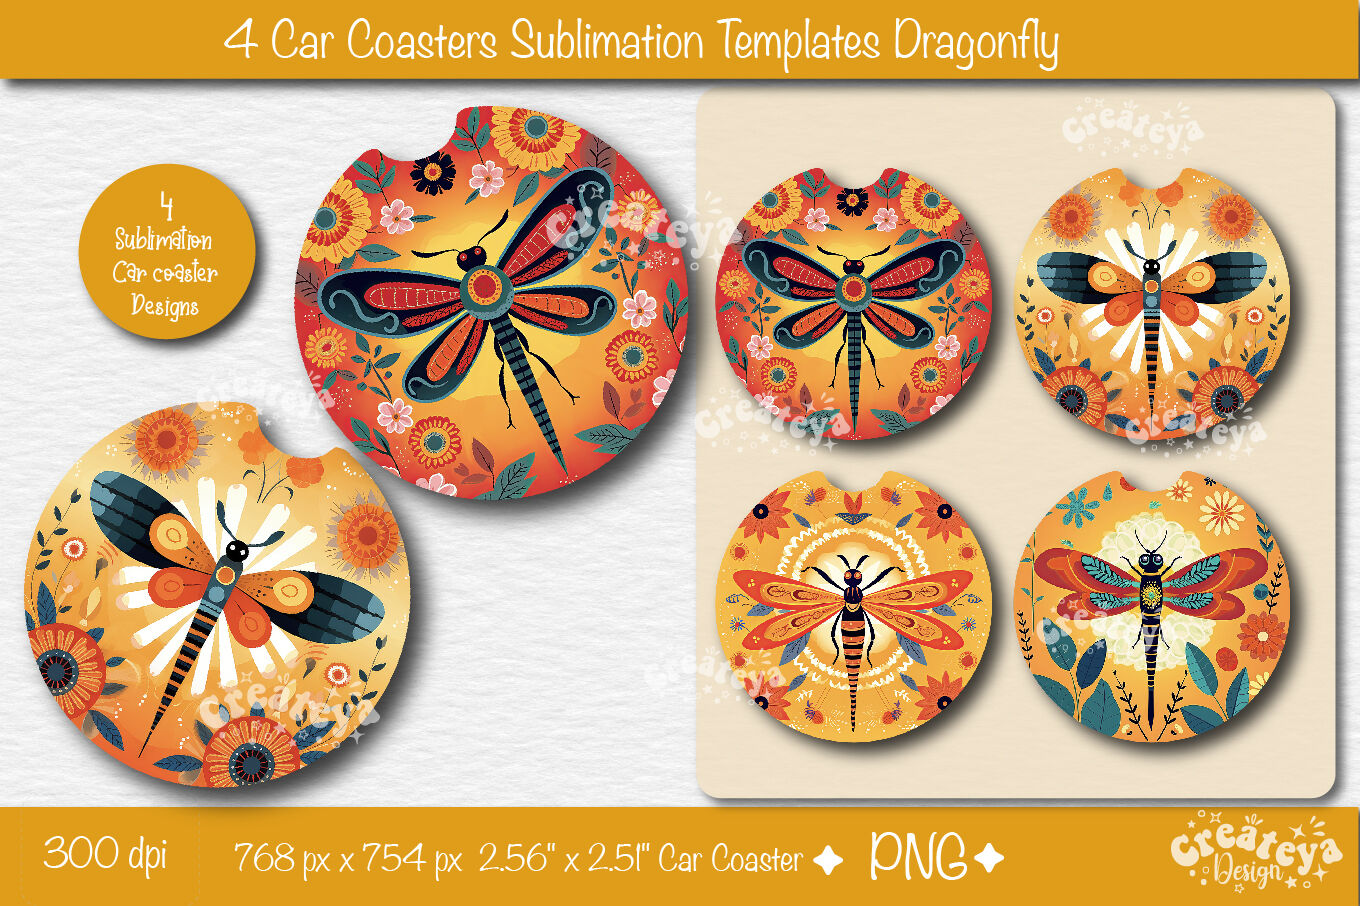 Free Sublimation download - Car Coaster Sublimation Bundle